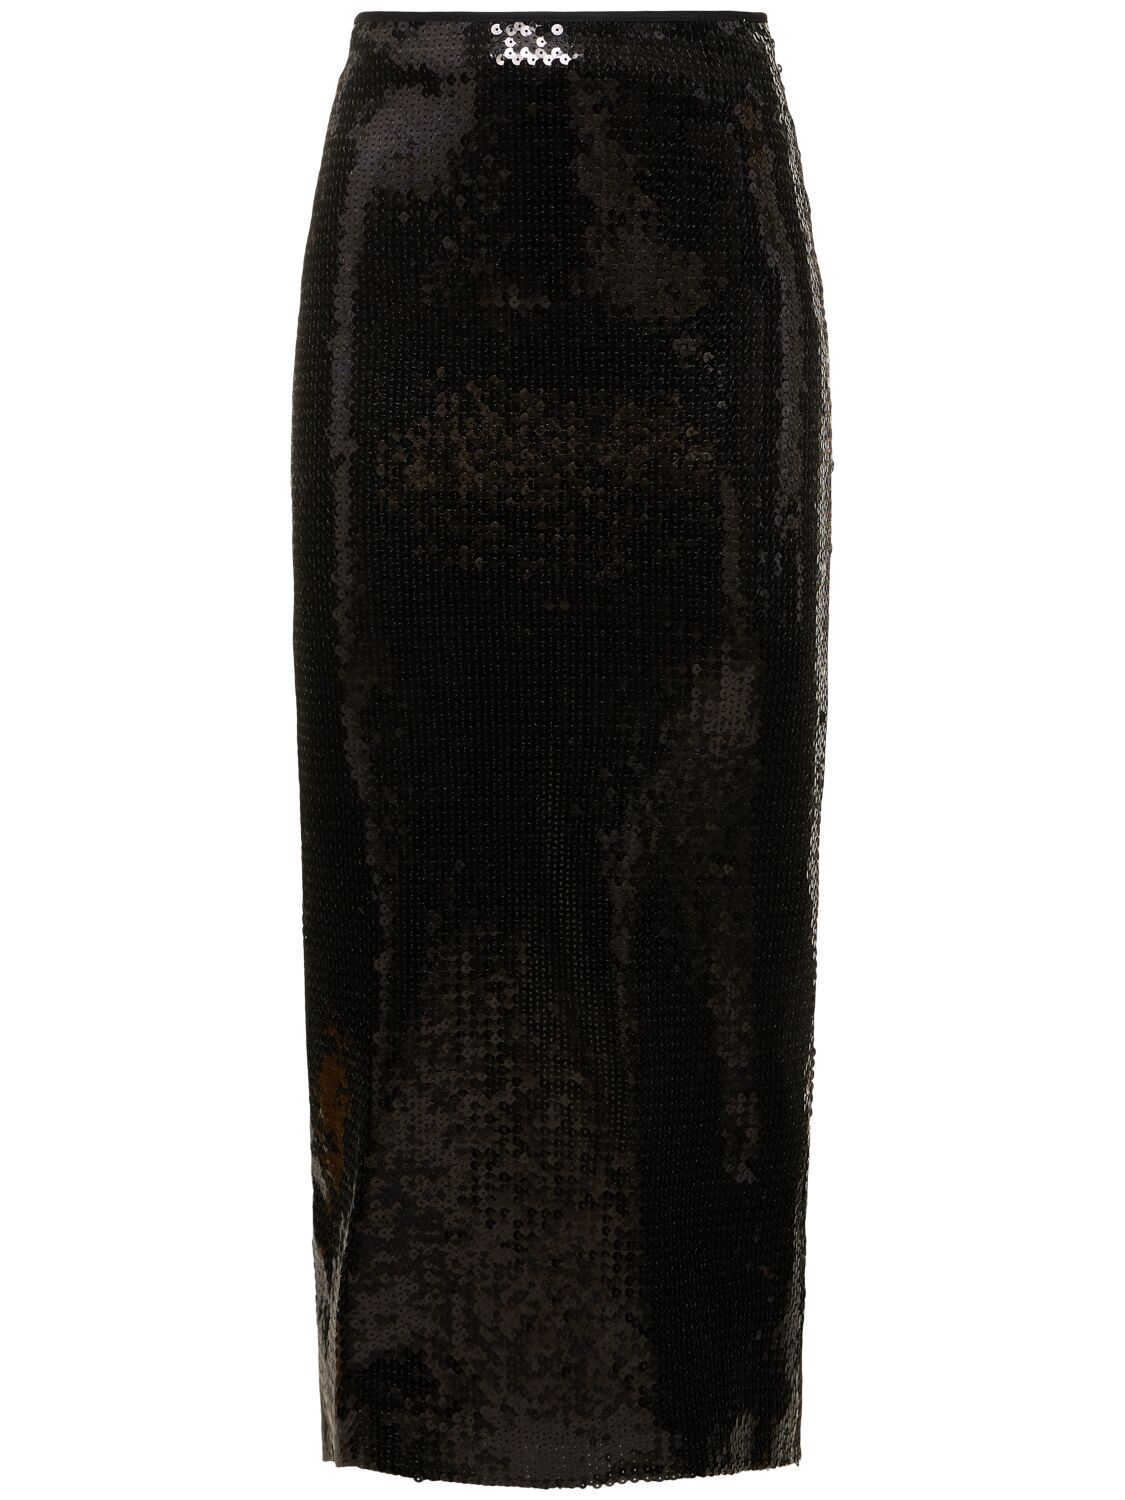 Image of Metallic Sequined Pencil Midi Skirt